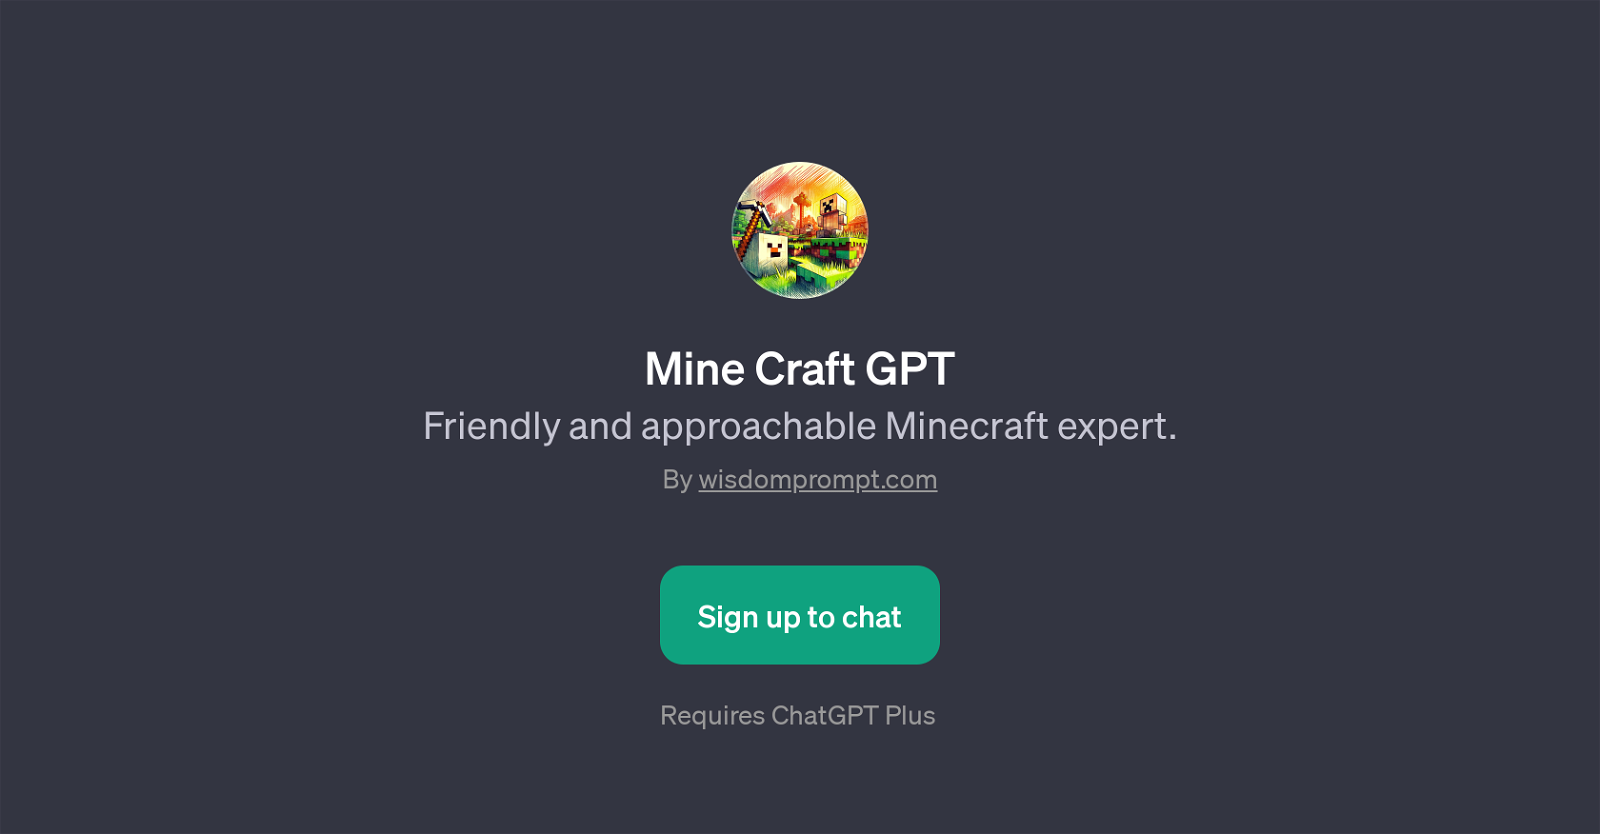 Mine Craft GPT website